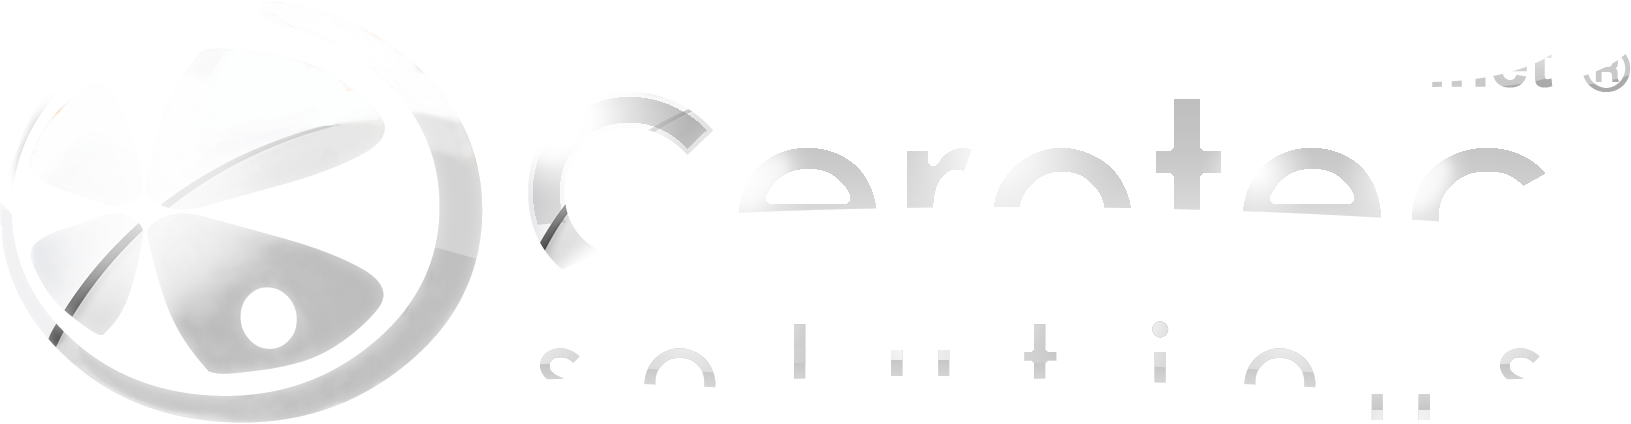 (c) Cerotec.net